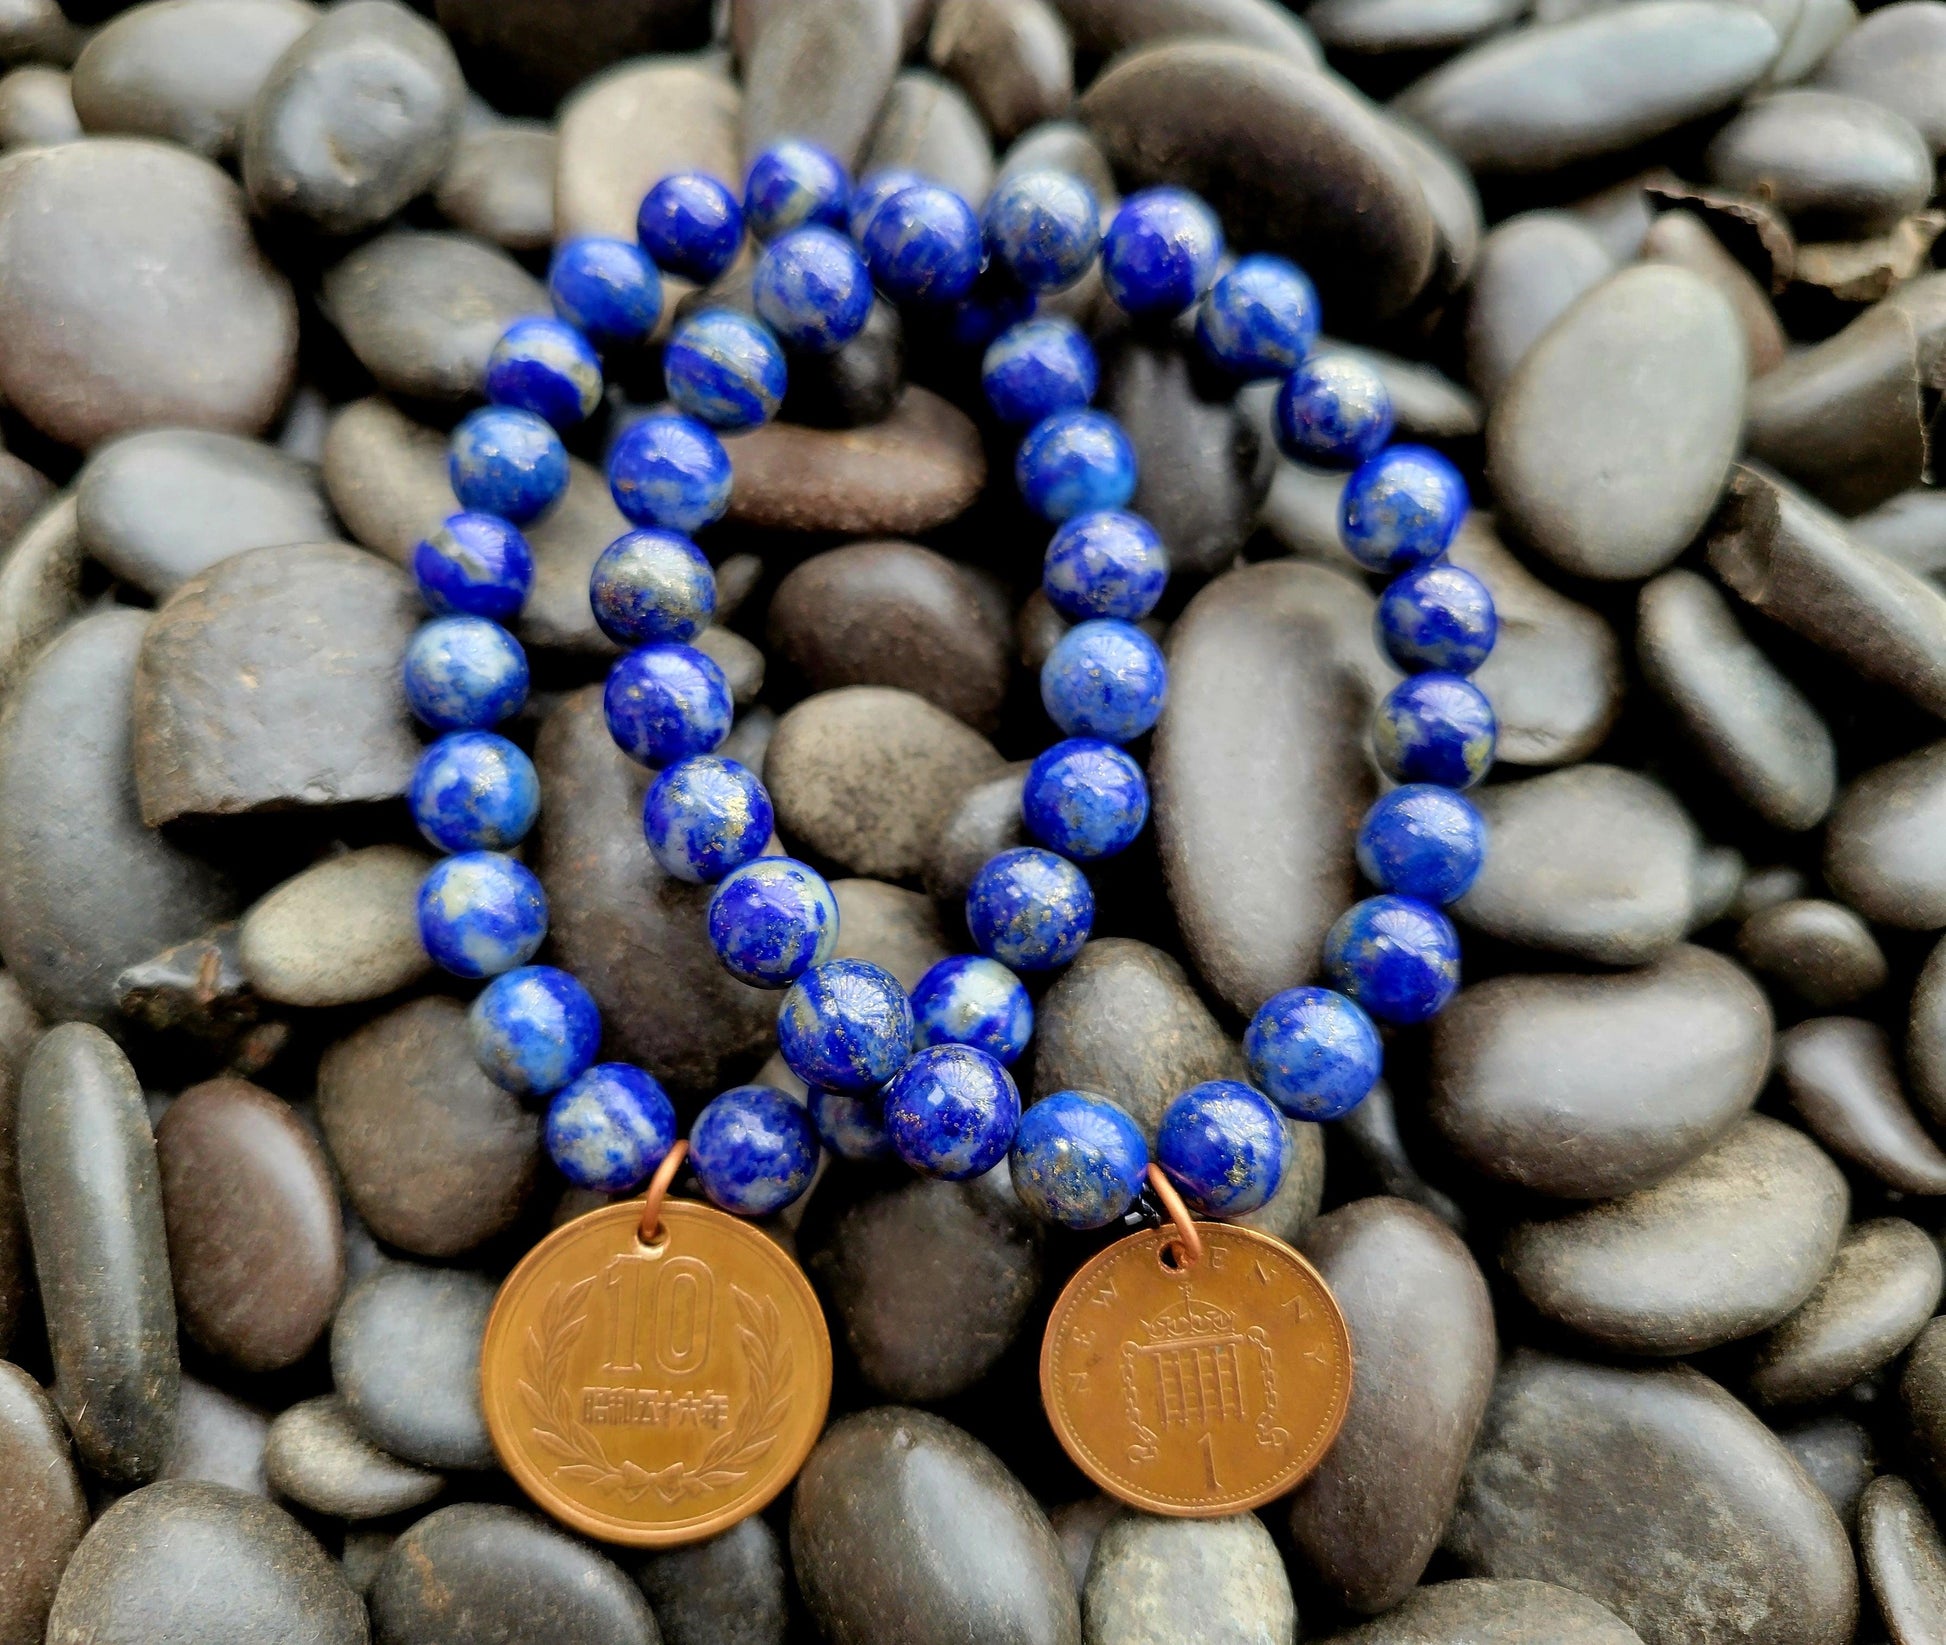 Lapis Lazuli Bead Bracelet - Shop World Links